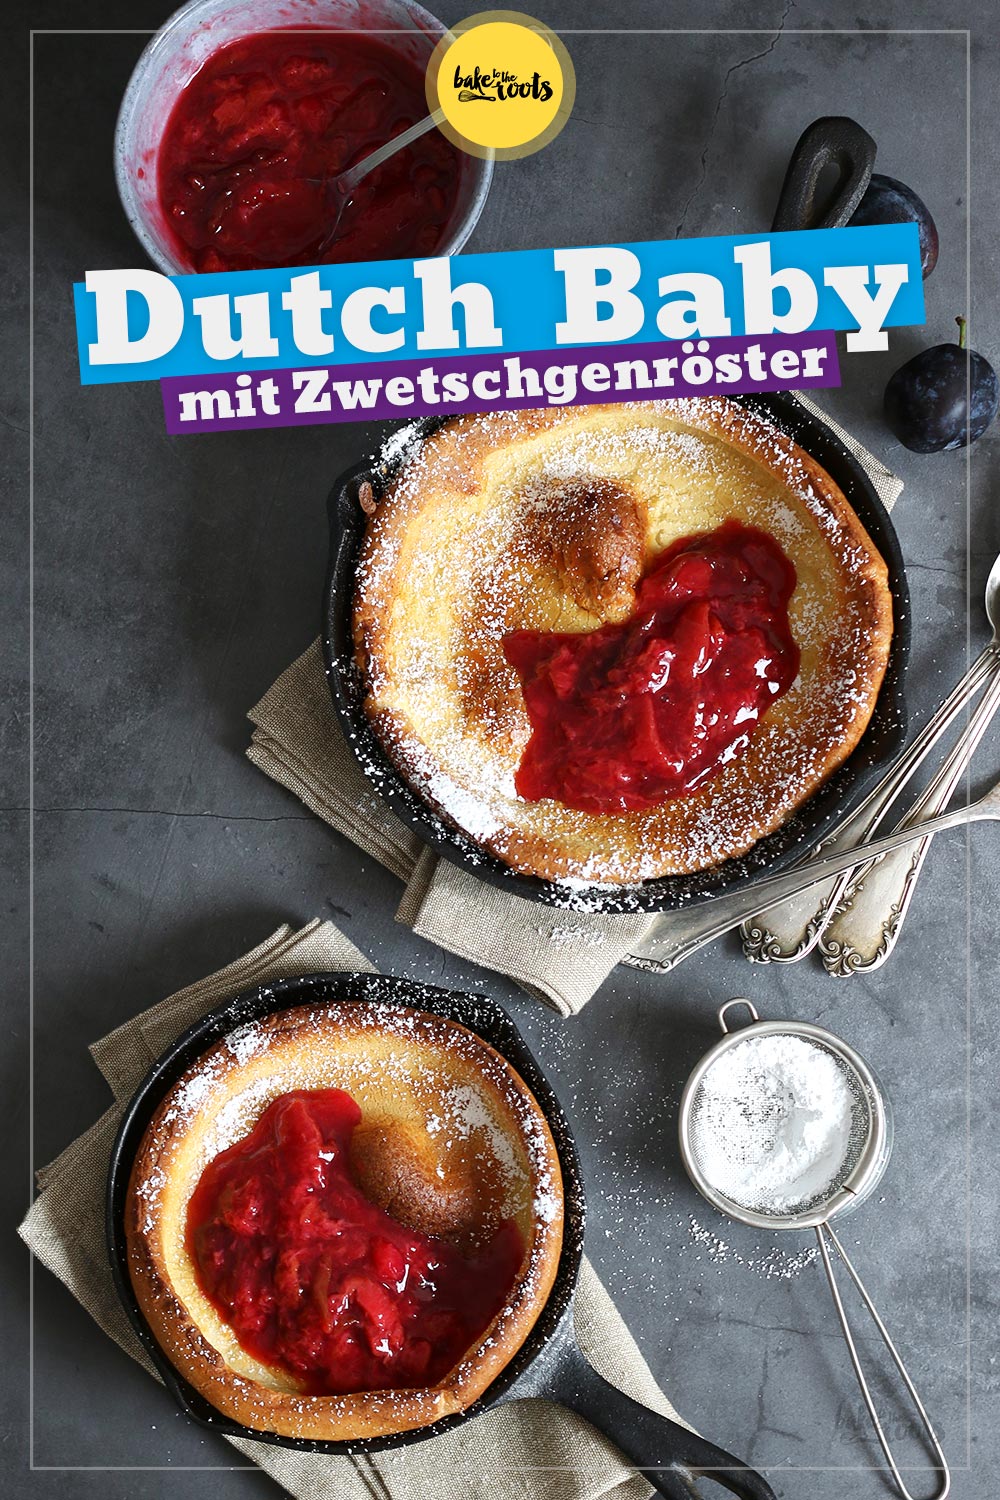 Dutch Baby mit Zwetschgenröster | Bake to the roots